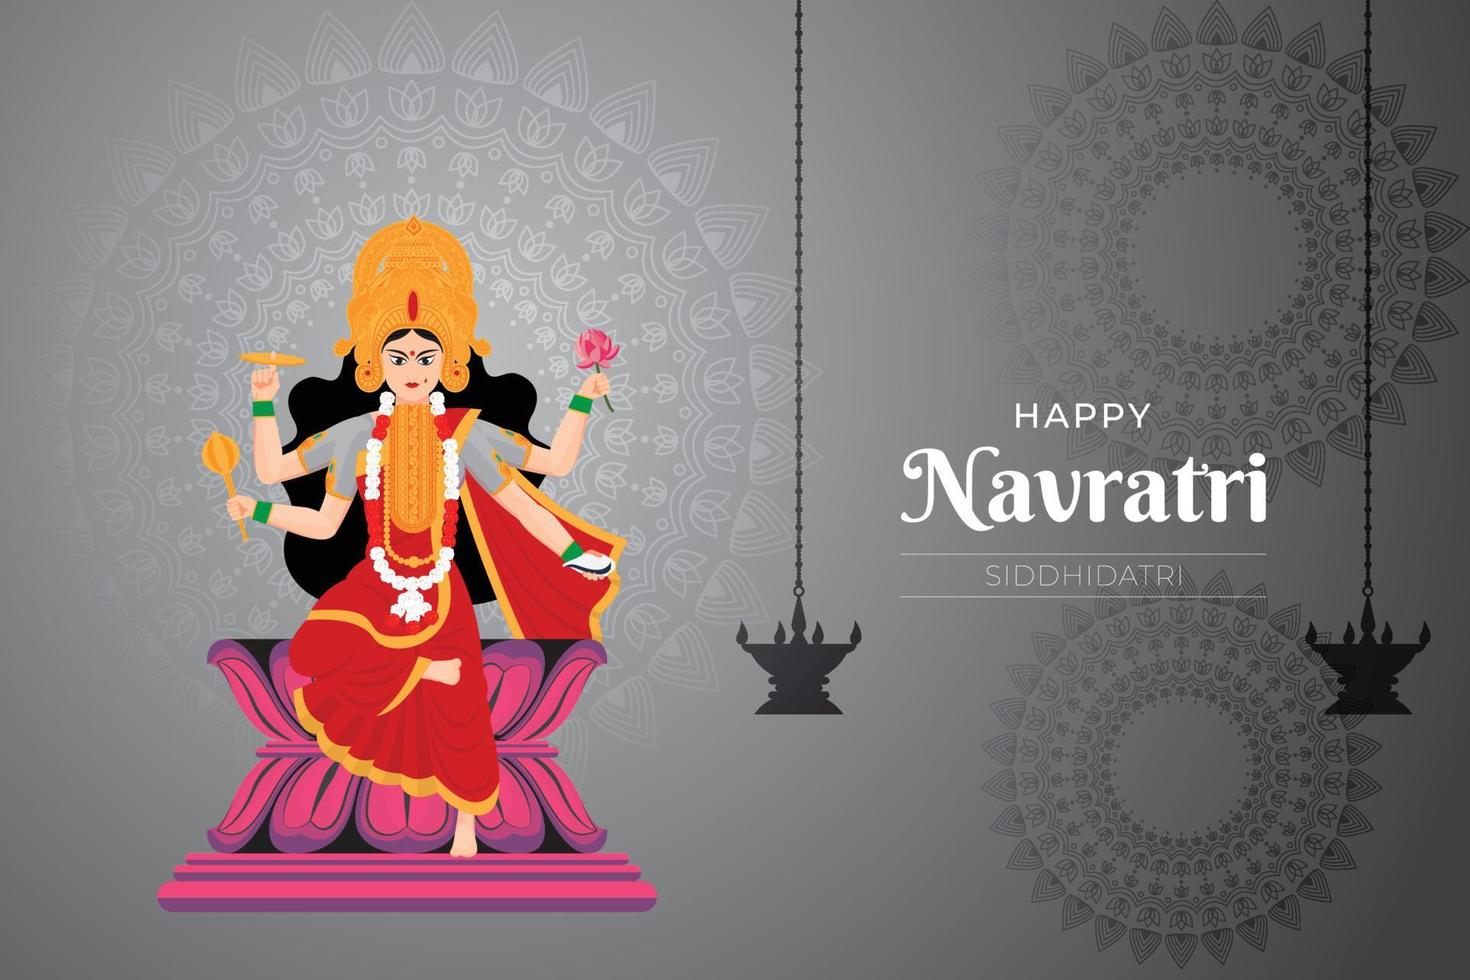 Happy Navratri wishes, concept art of Navratri, illustration of 9 ...